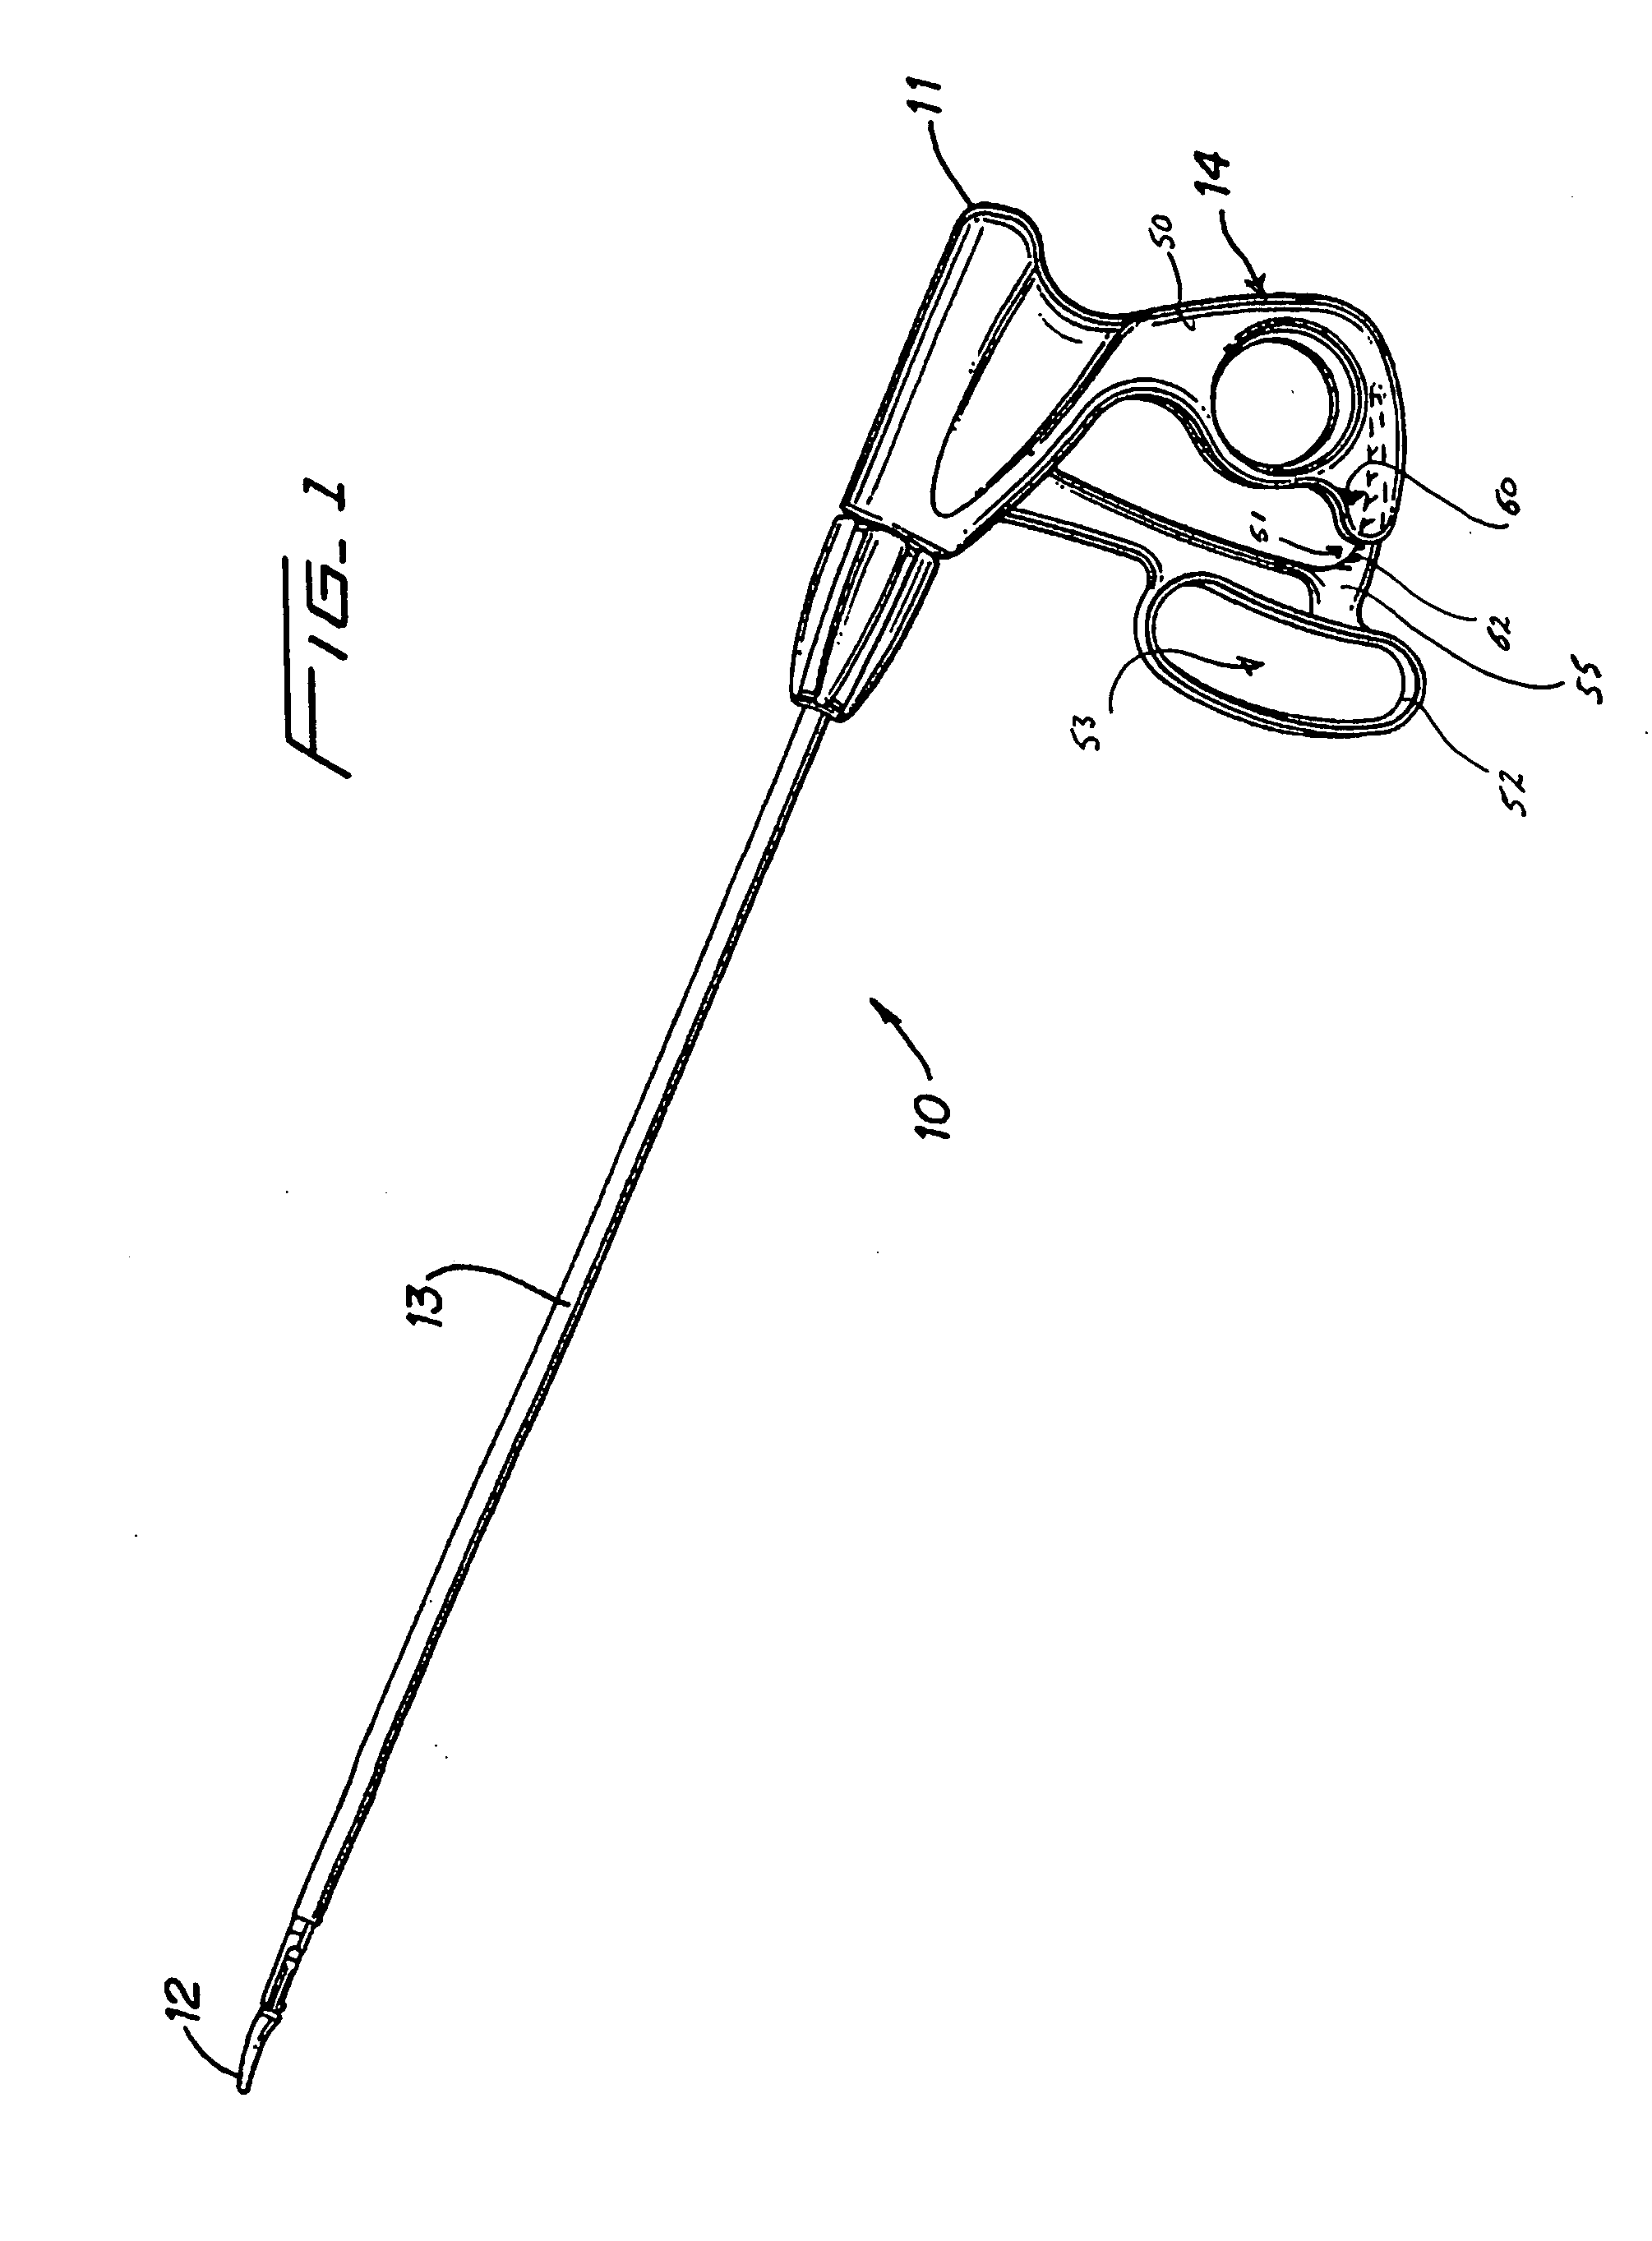 Laparoscopic bipolar electrosurgical instrument